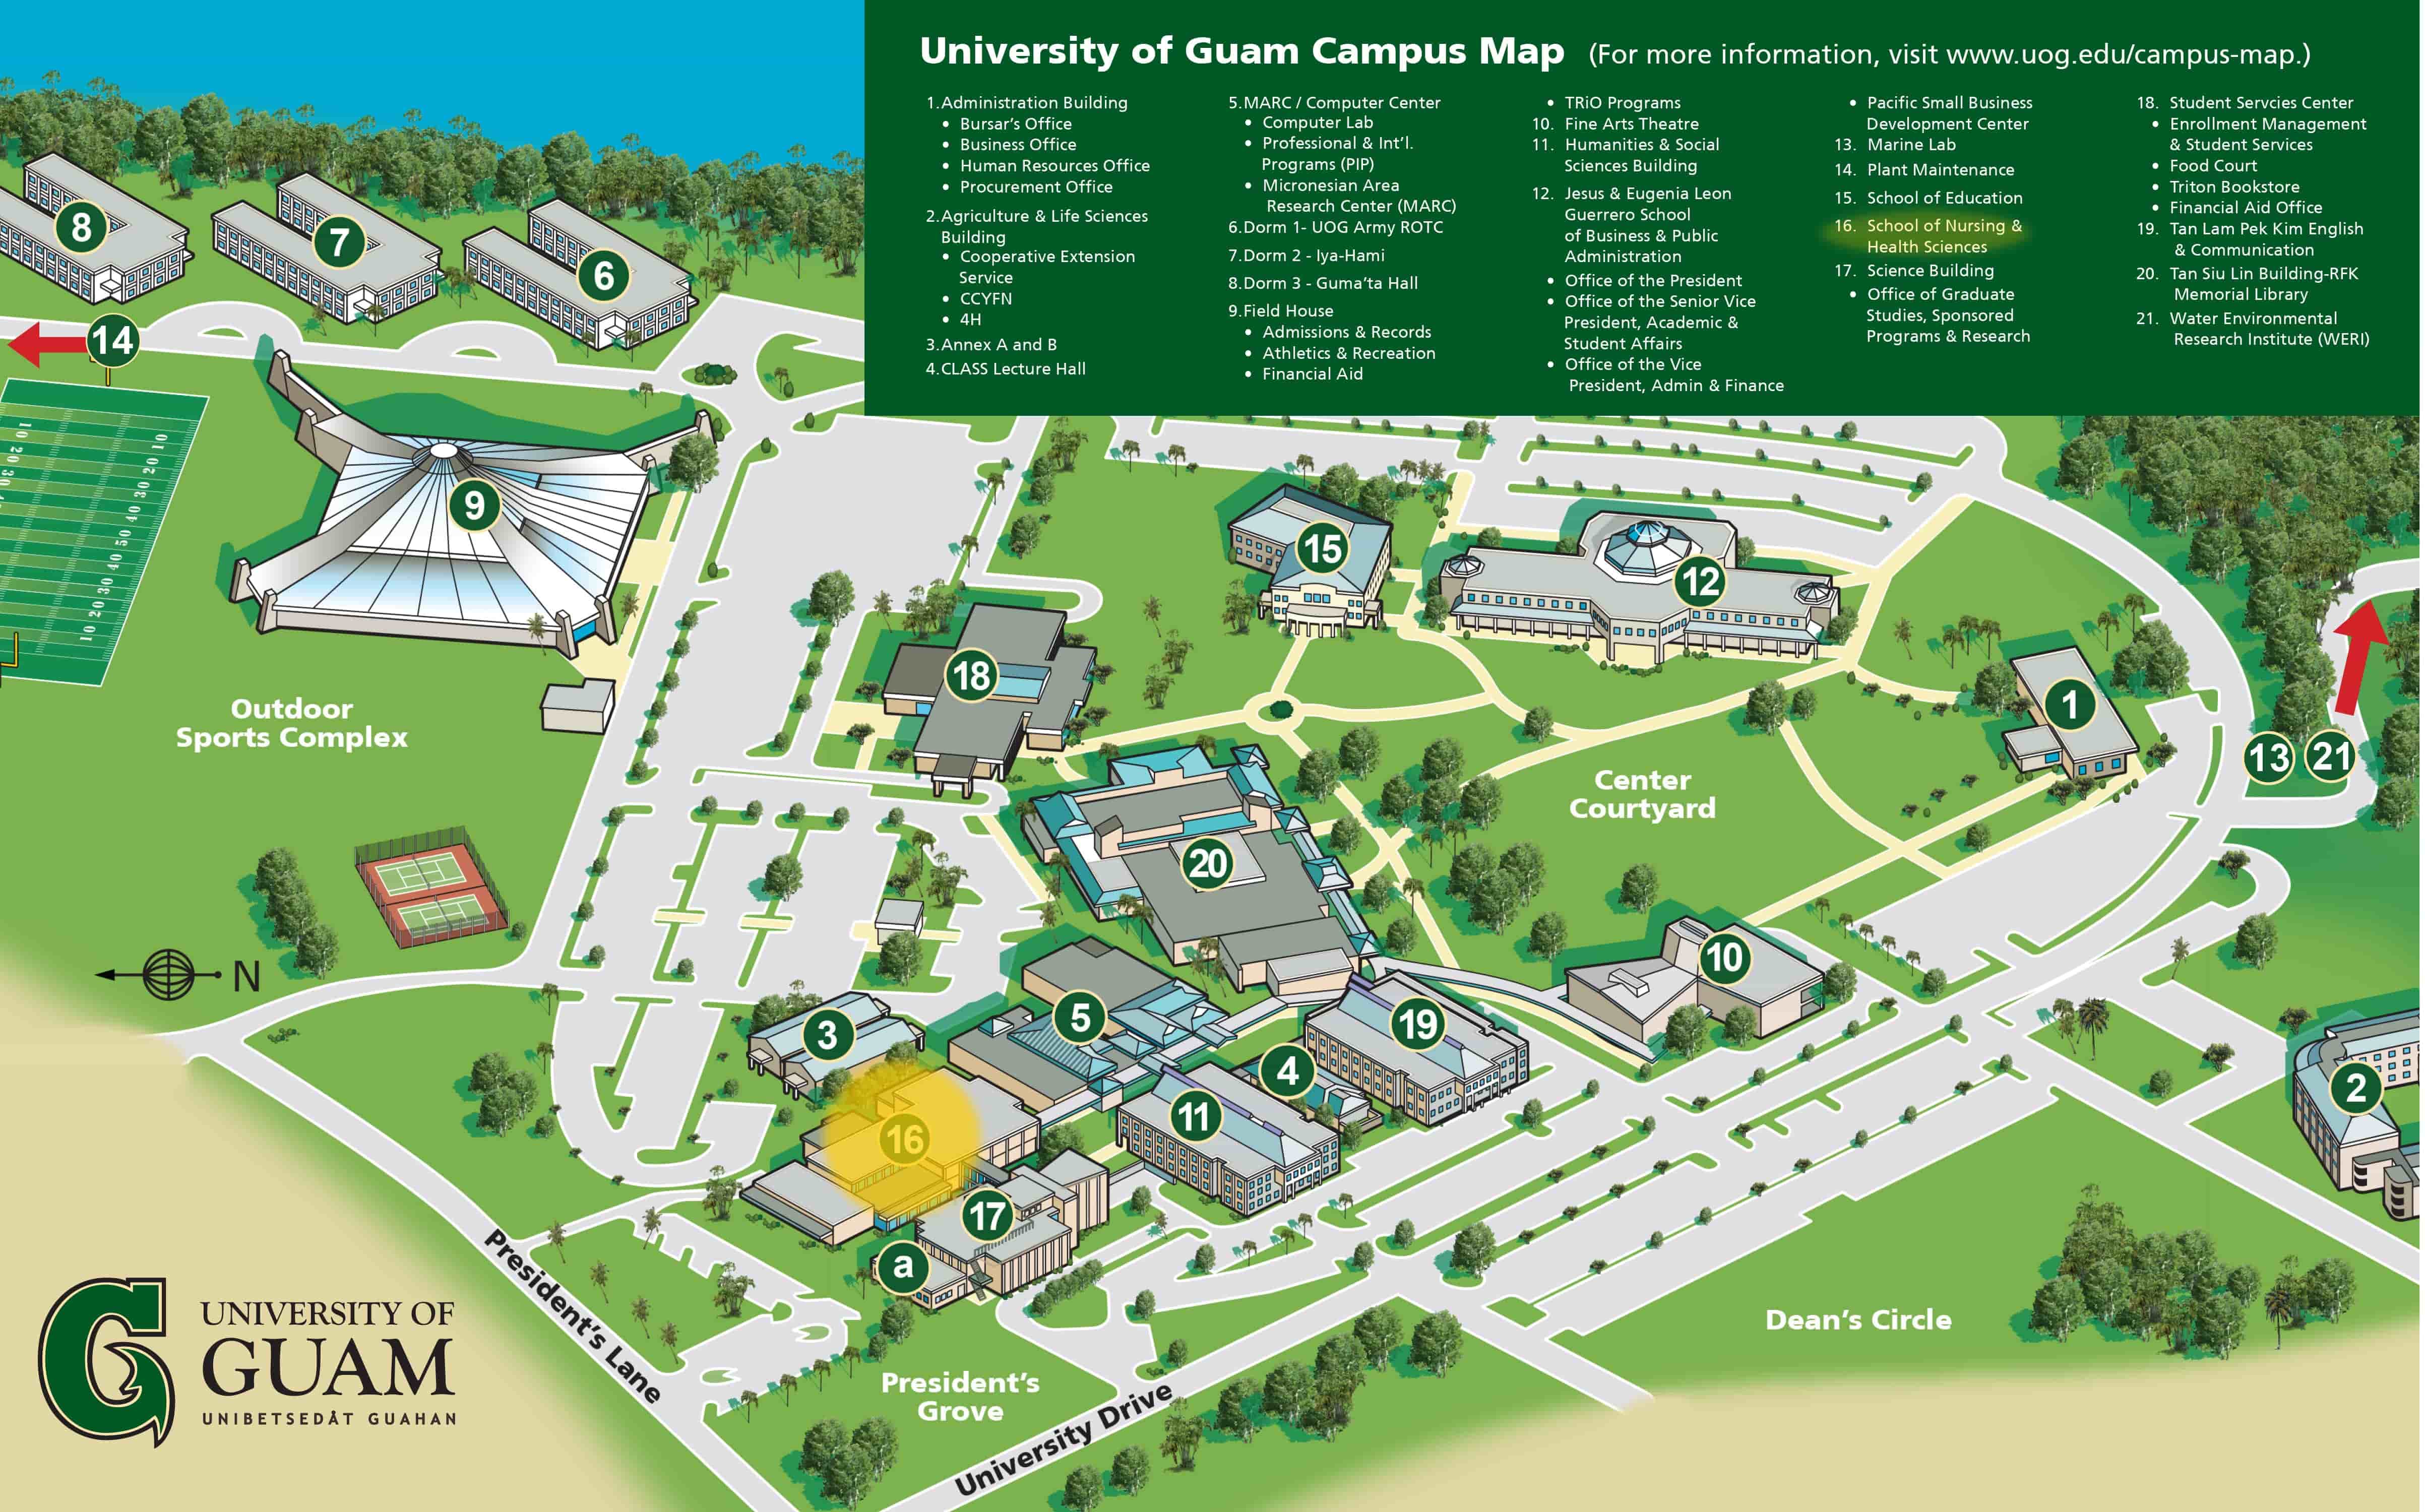 UOG Campus Map with Margaret Perez Hattori-Uchima School of Health highlighted